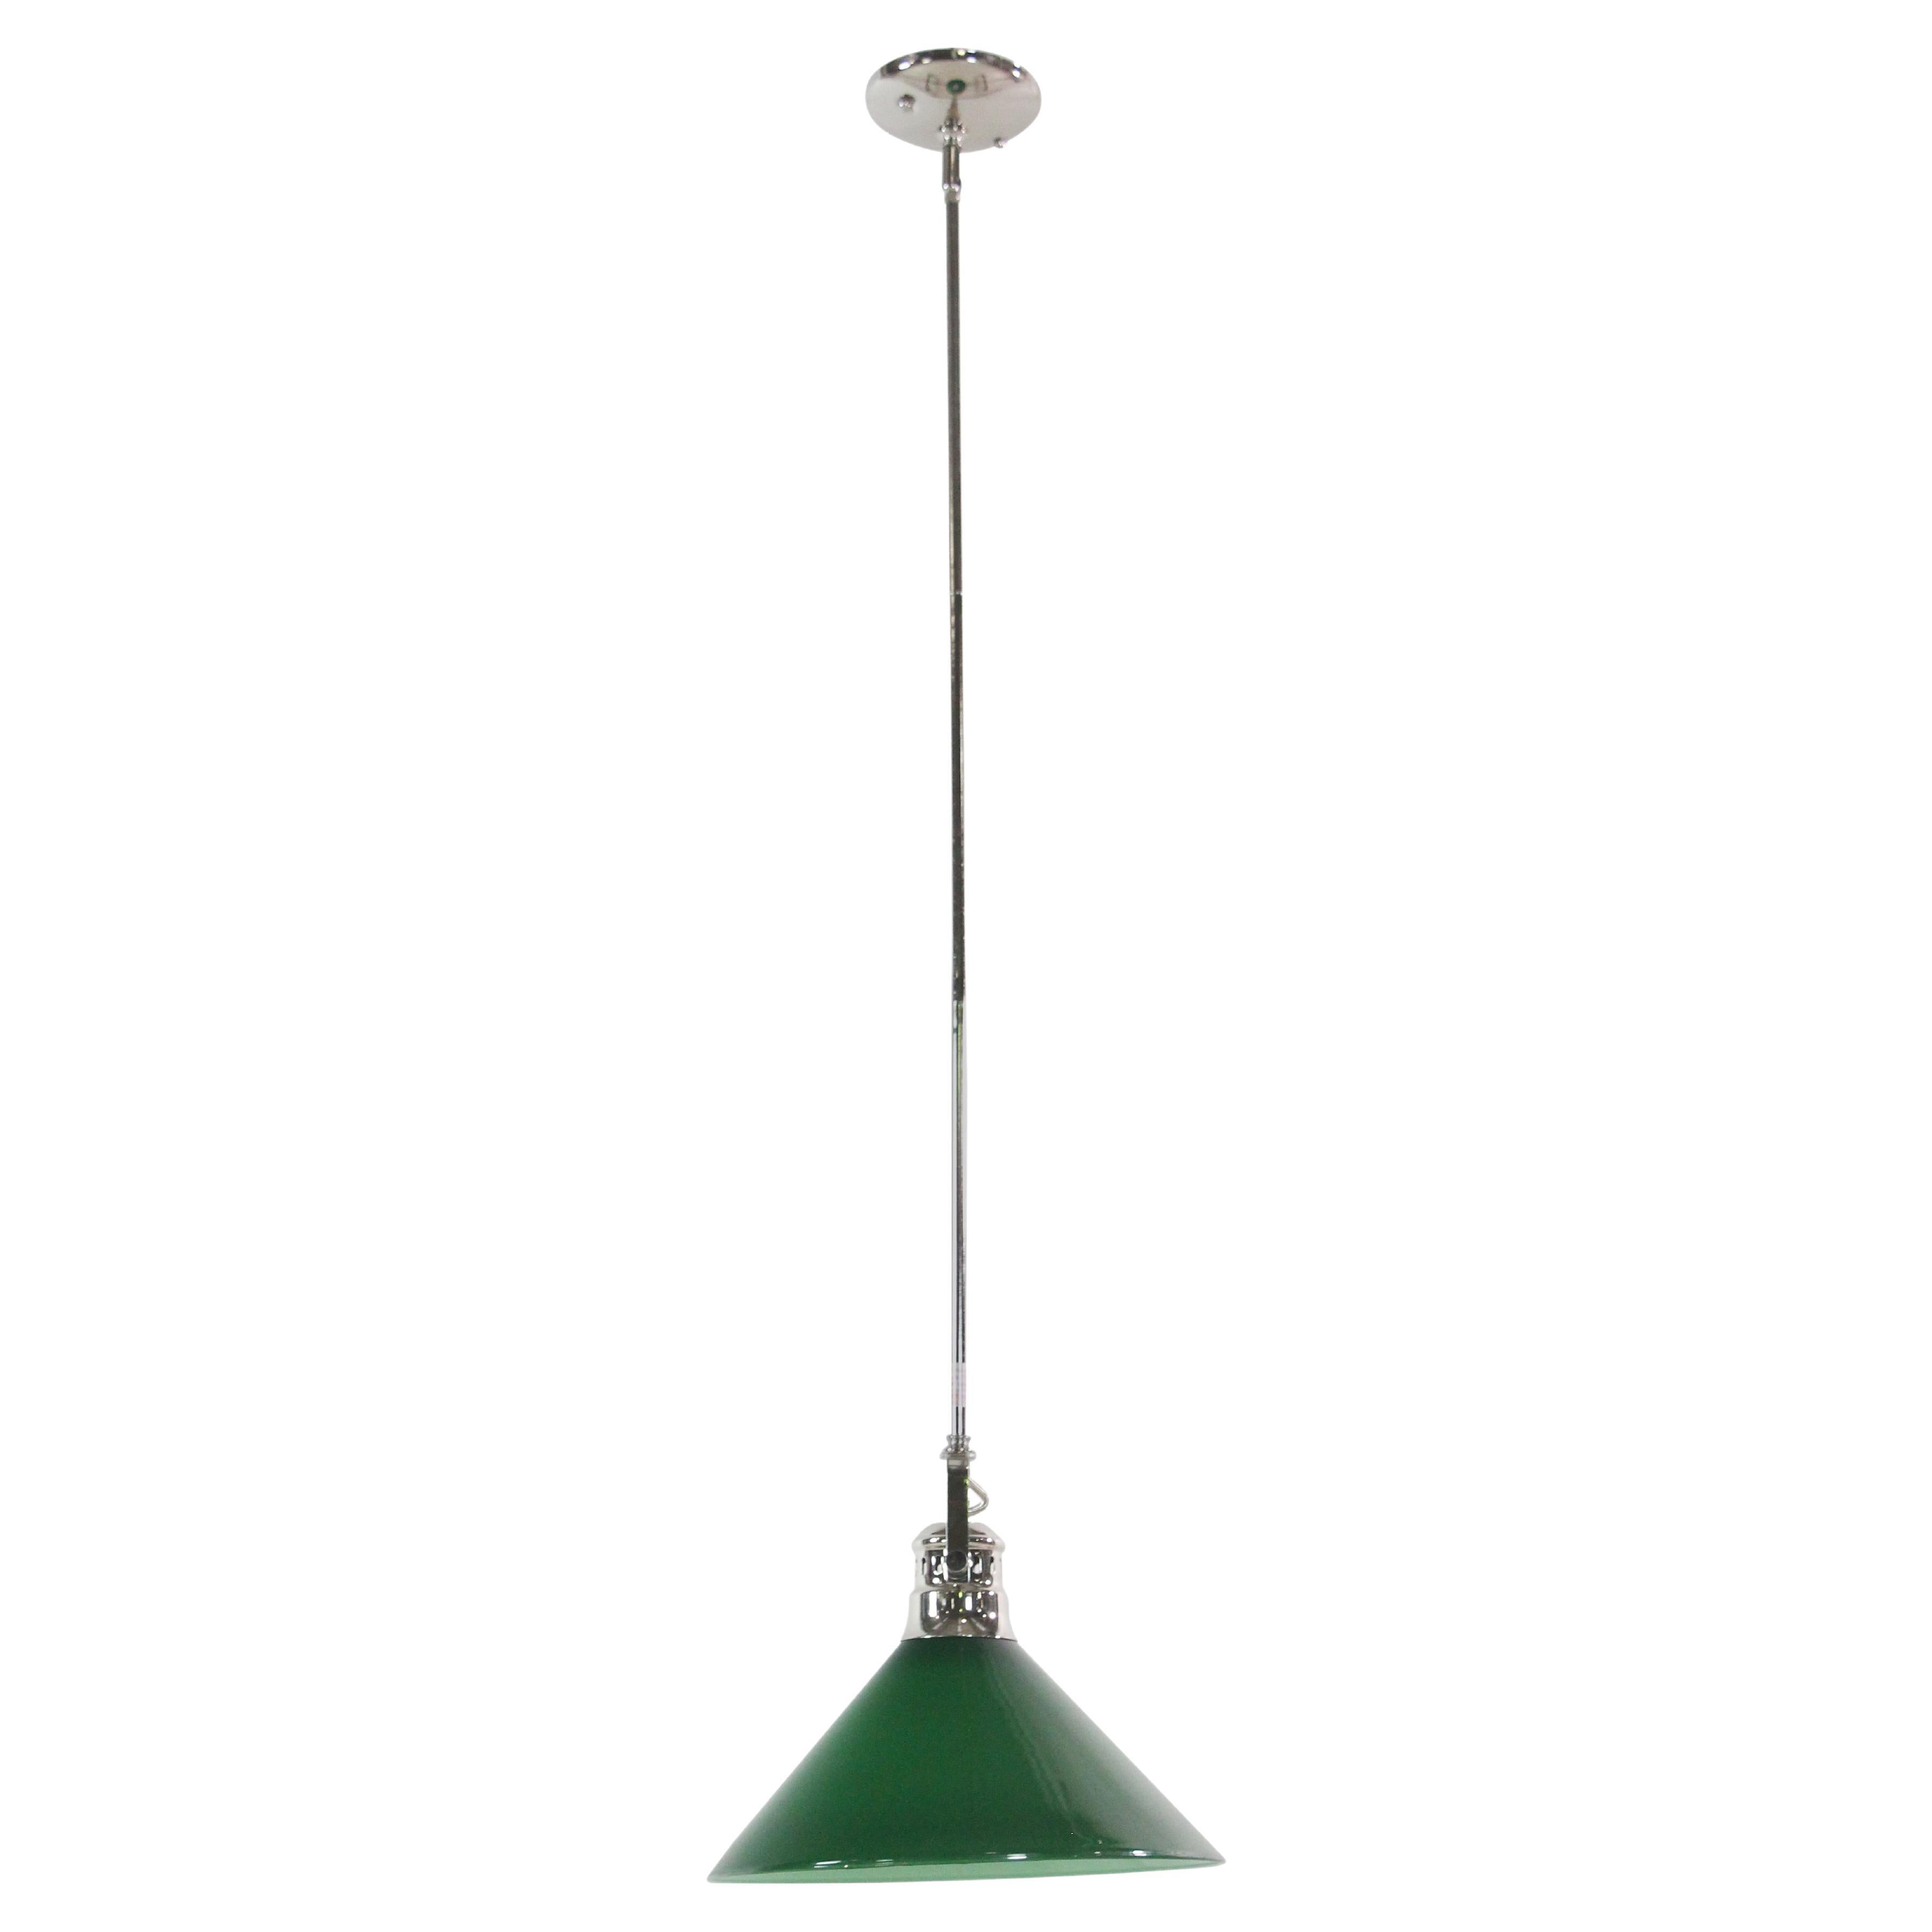 Lampe à suspension moderne en verre autrichien vert et nickel